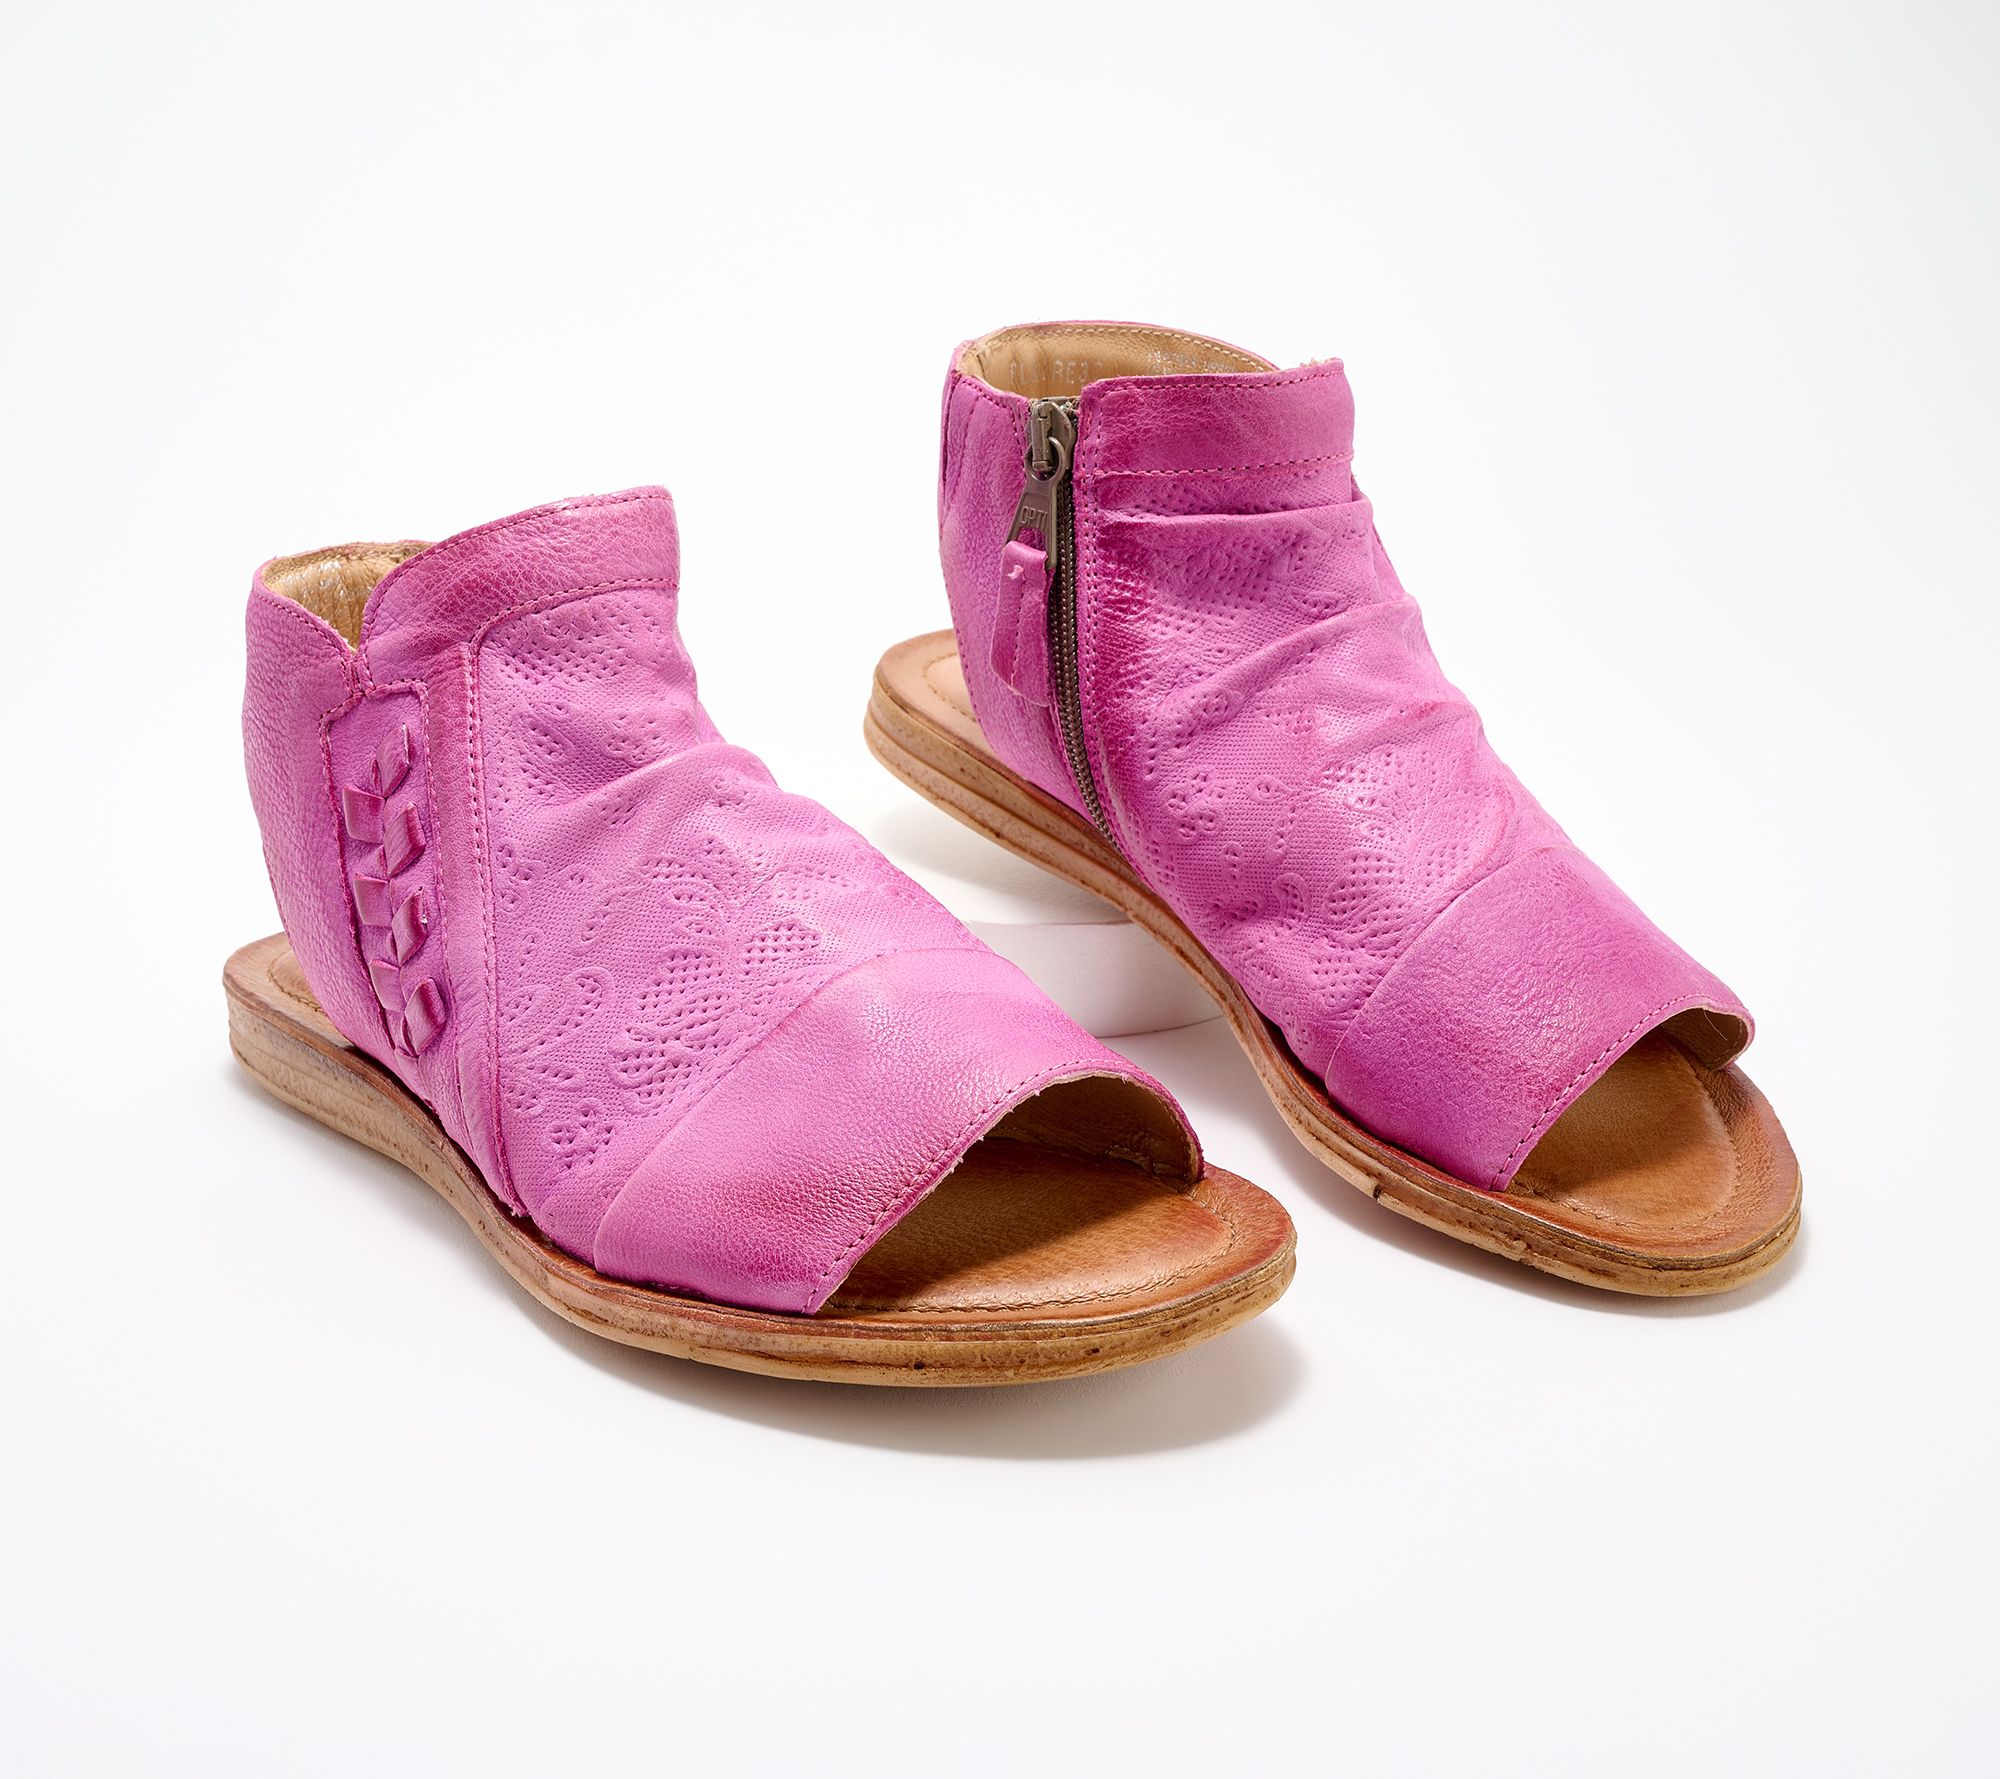 Miz Mooz Leather Wide Width Ankle Strap Sandals-Marcie 